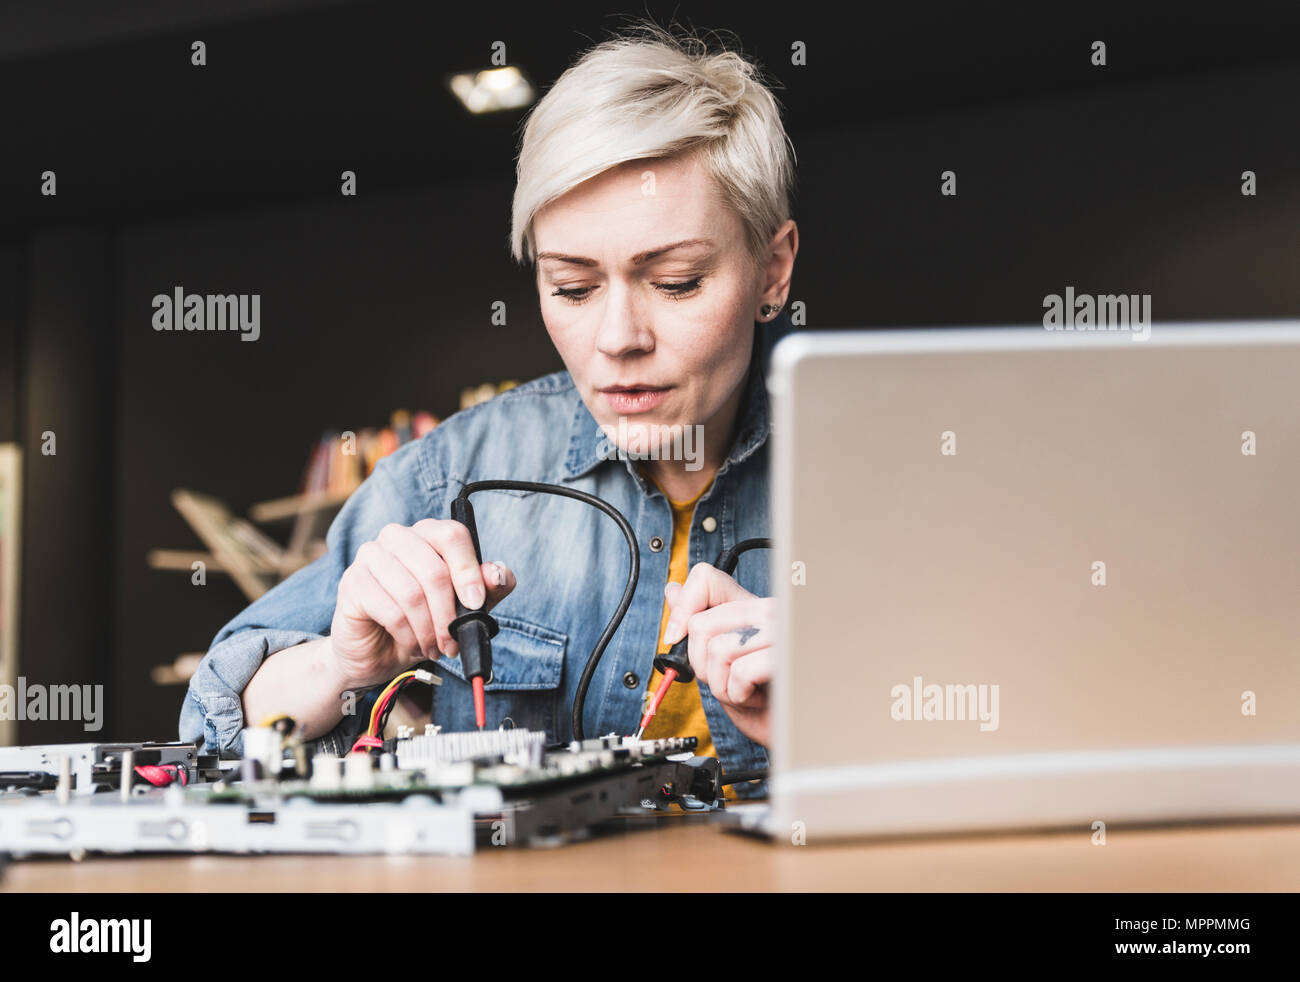 Woman working on computer equipment Stock Photo